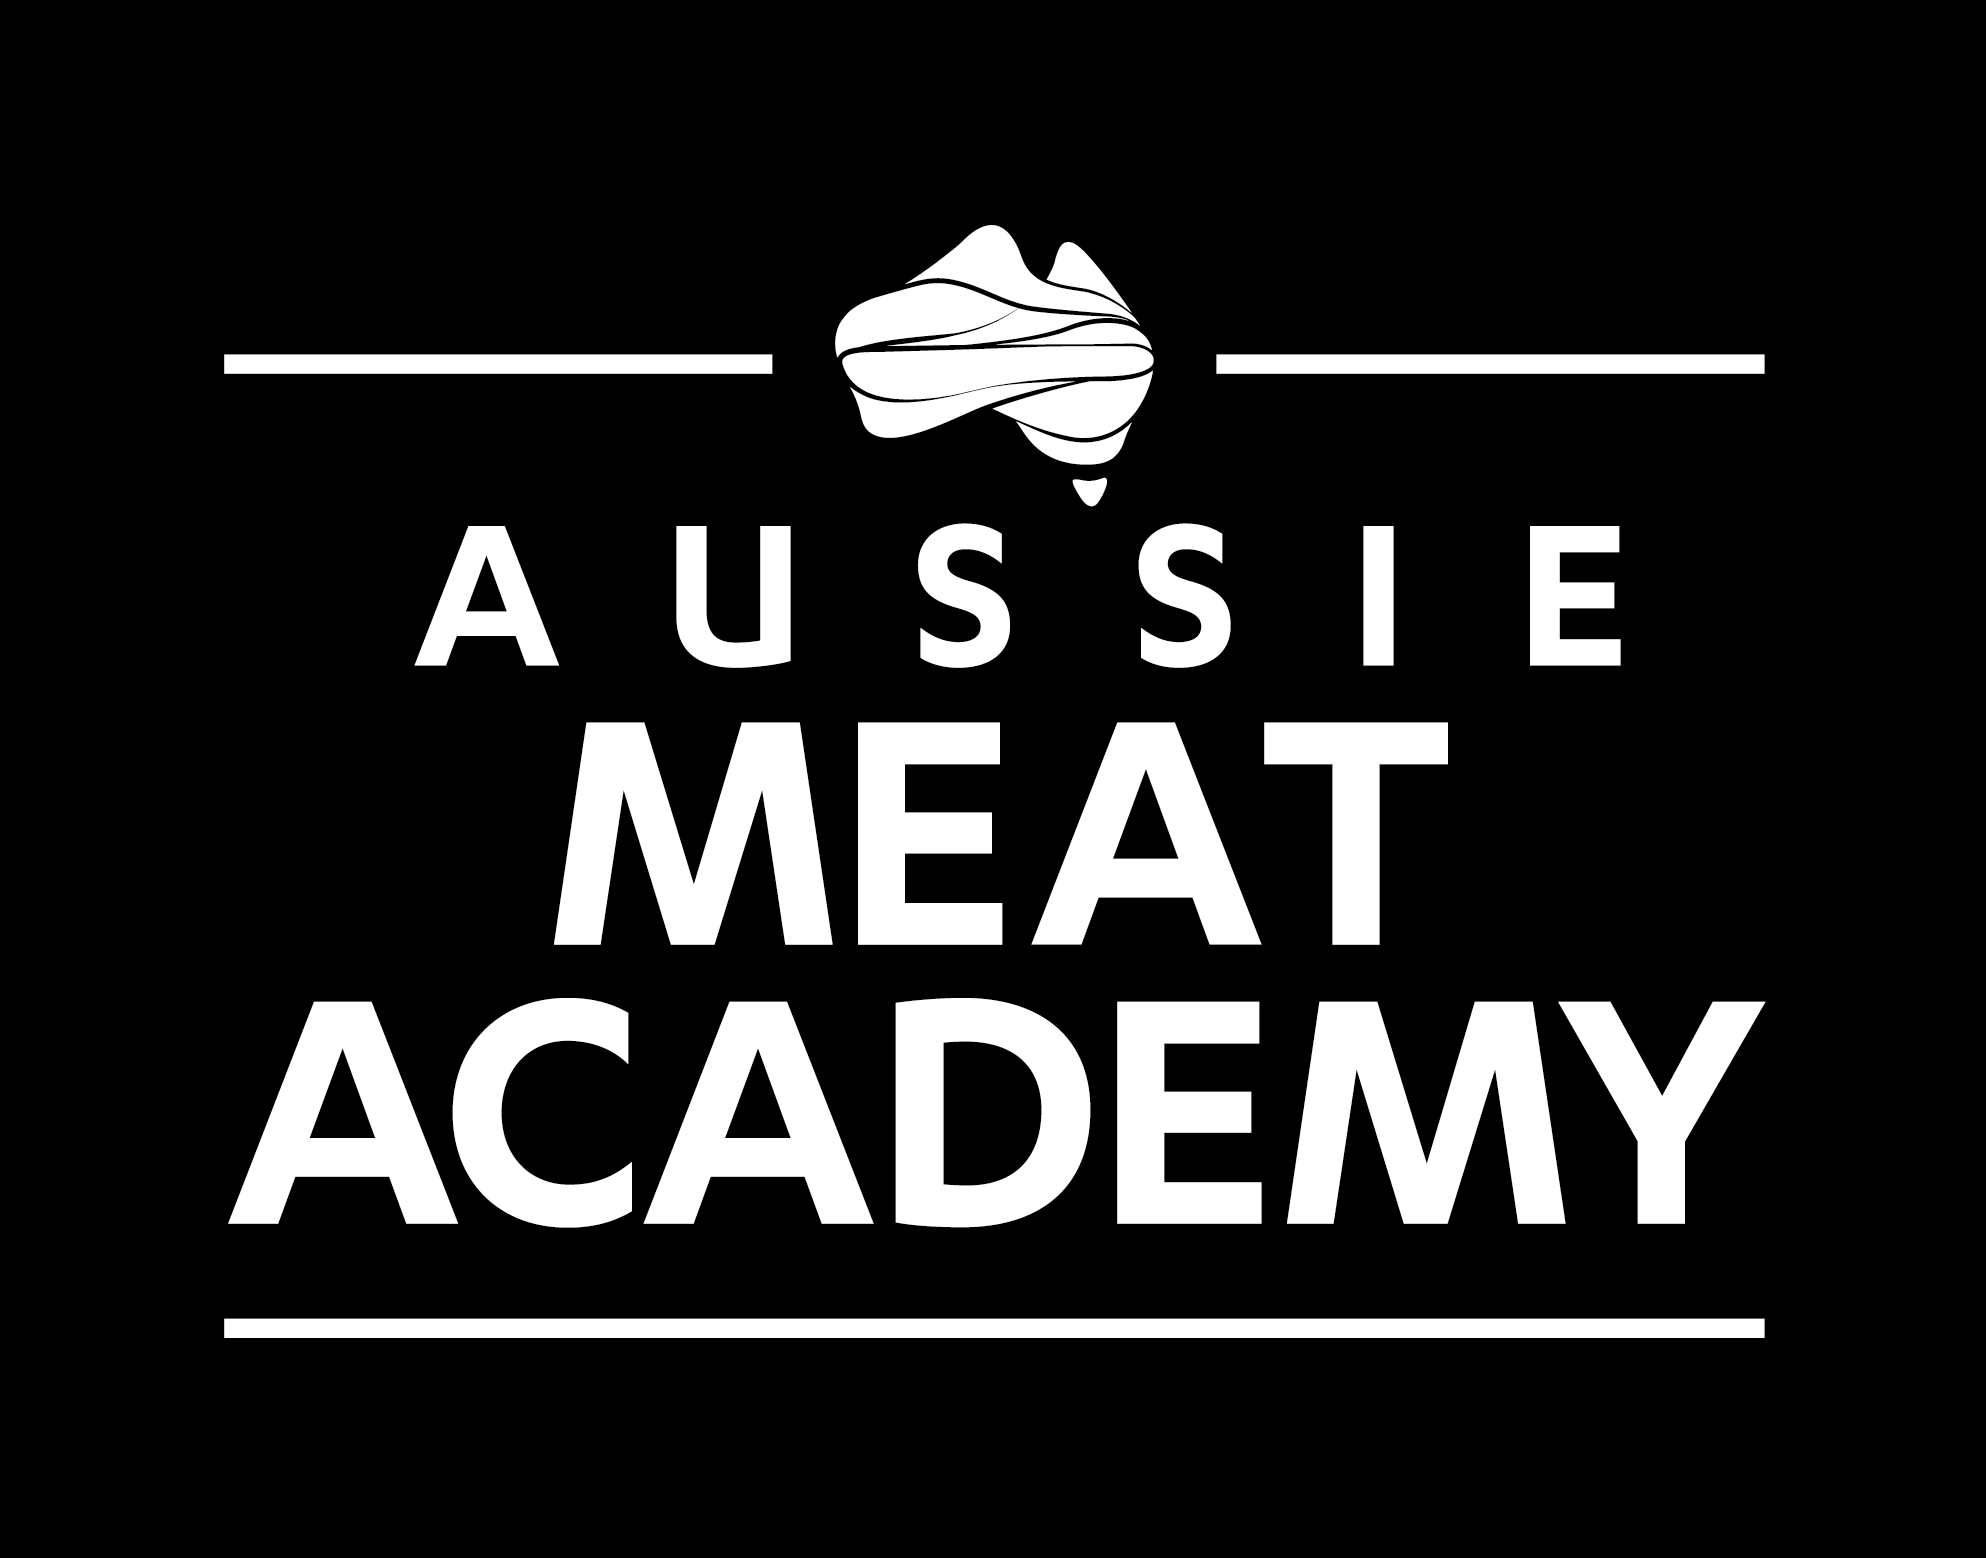 Aussie-Meat-Academy-Logo-orig-min.png